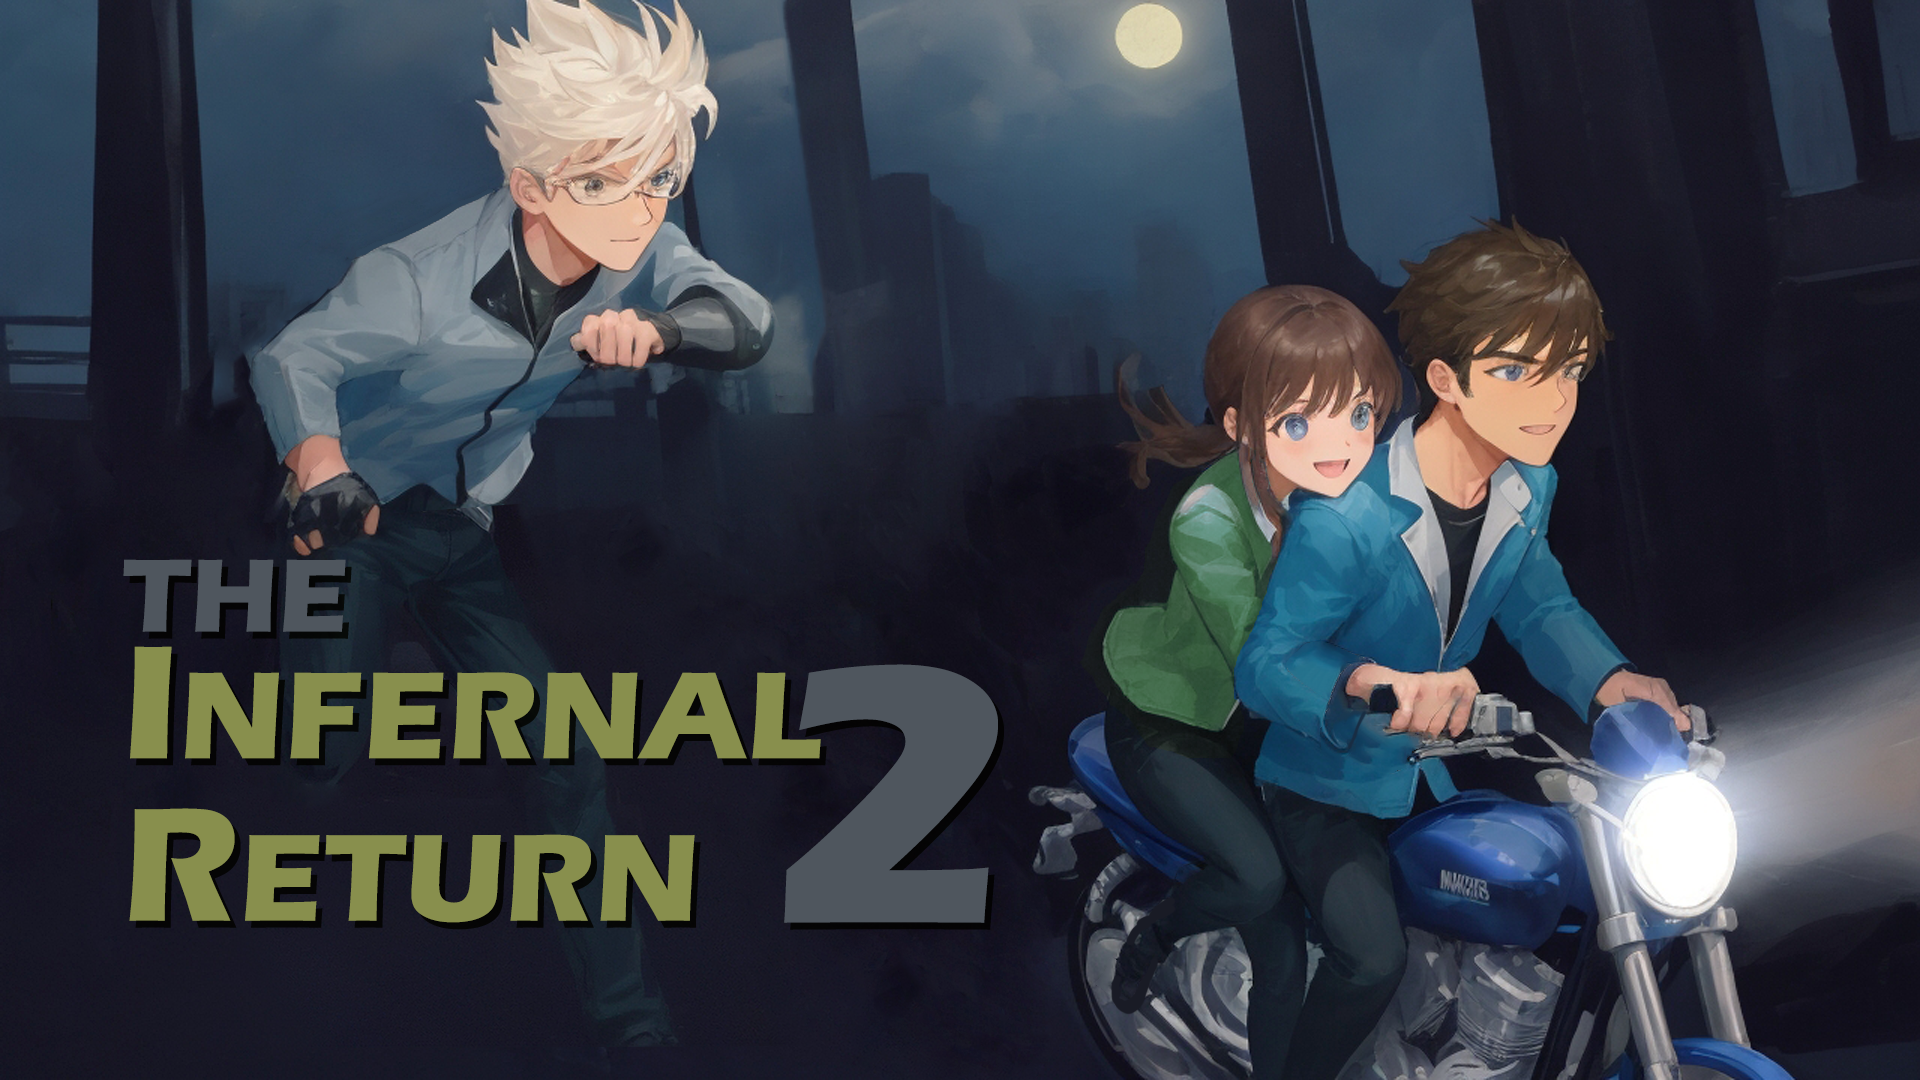 The Infernal Return 2 (Working Title)